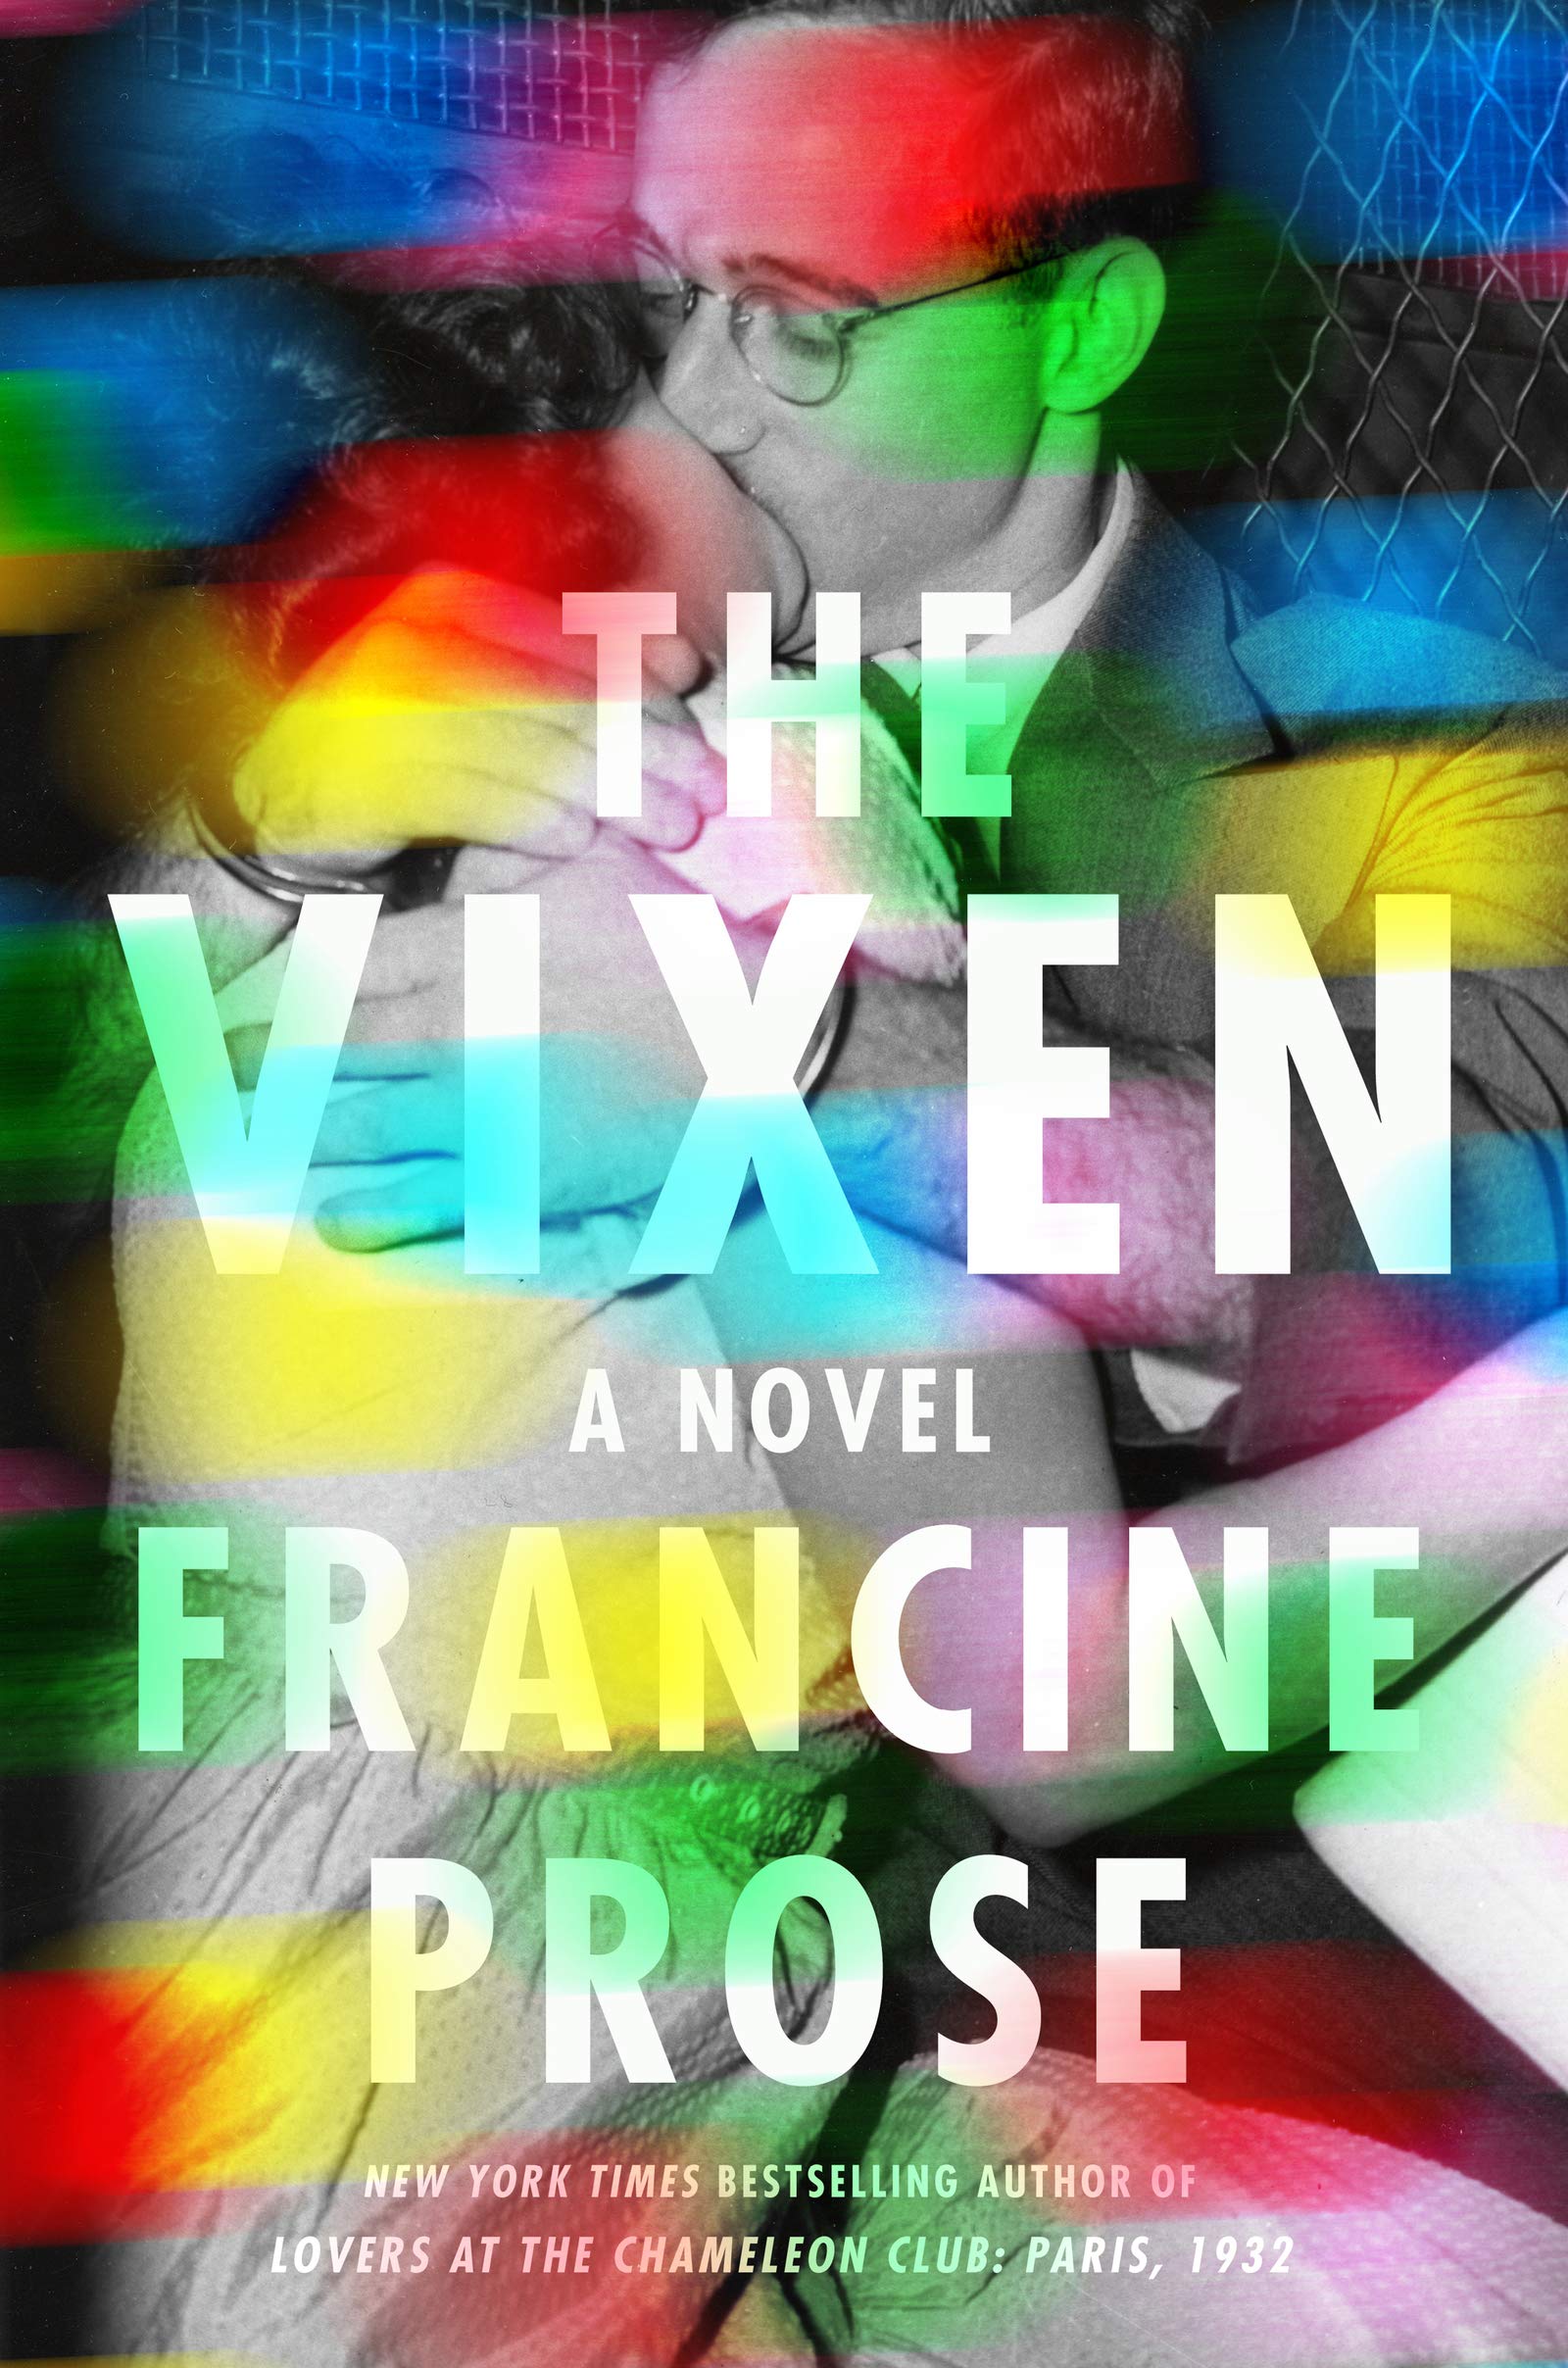 francine prose the vixen